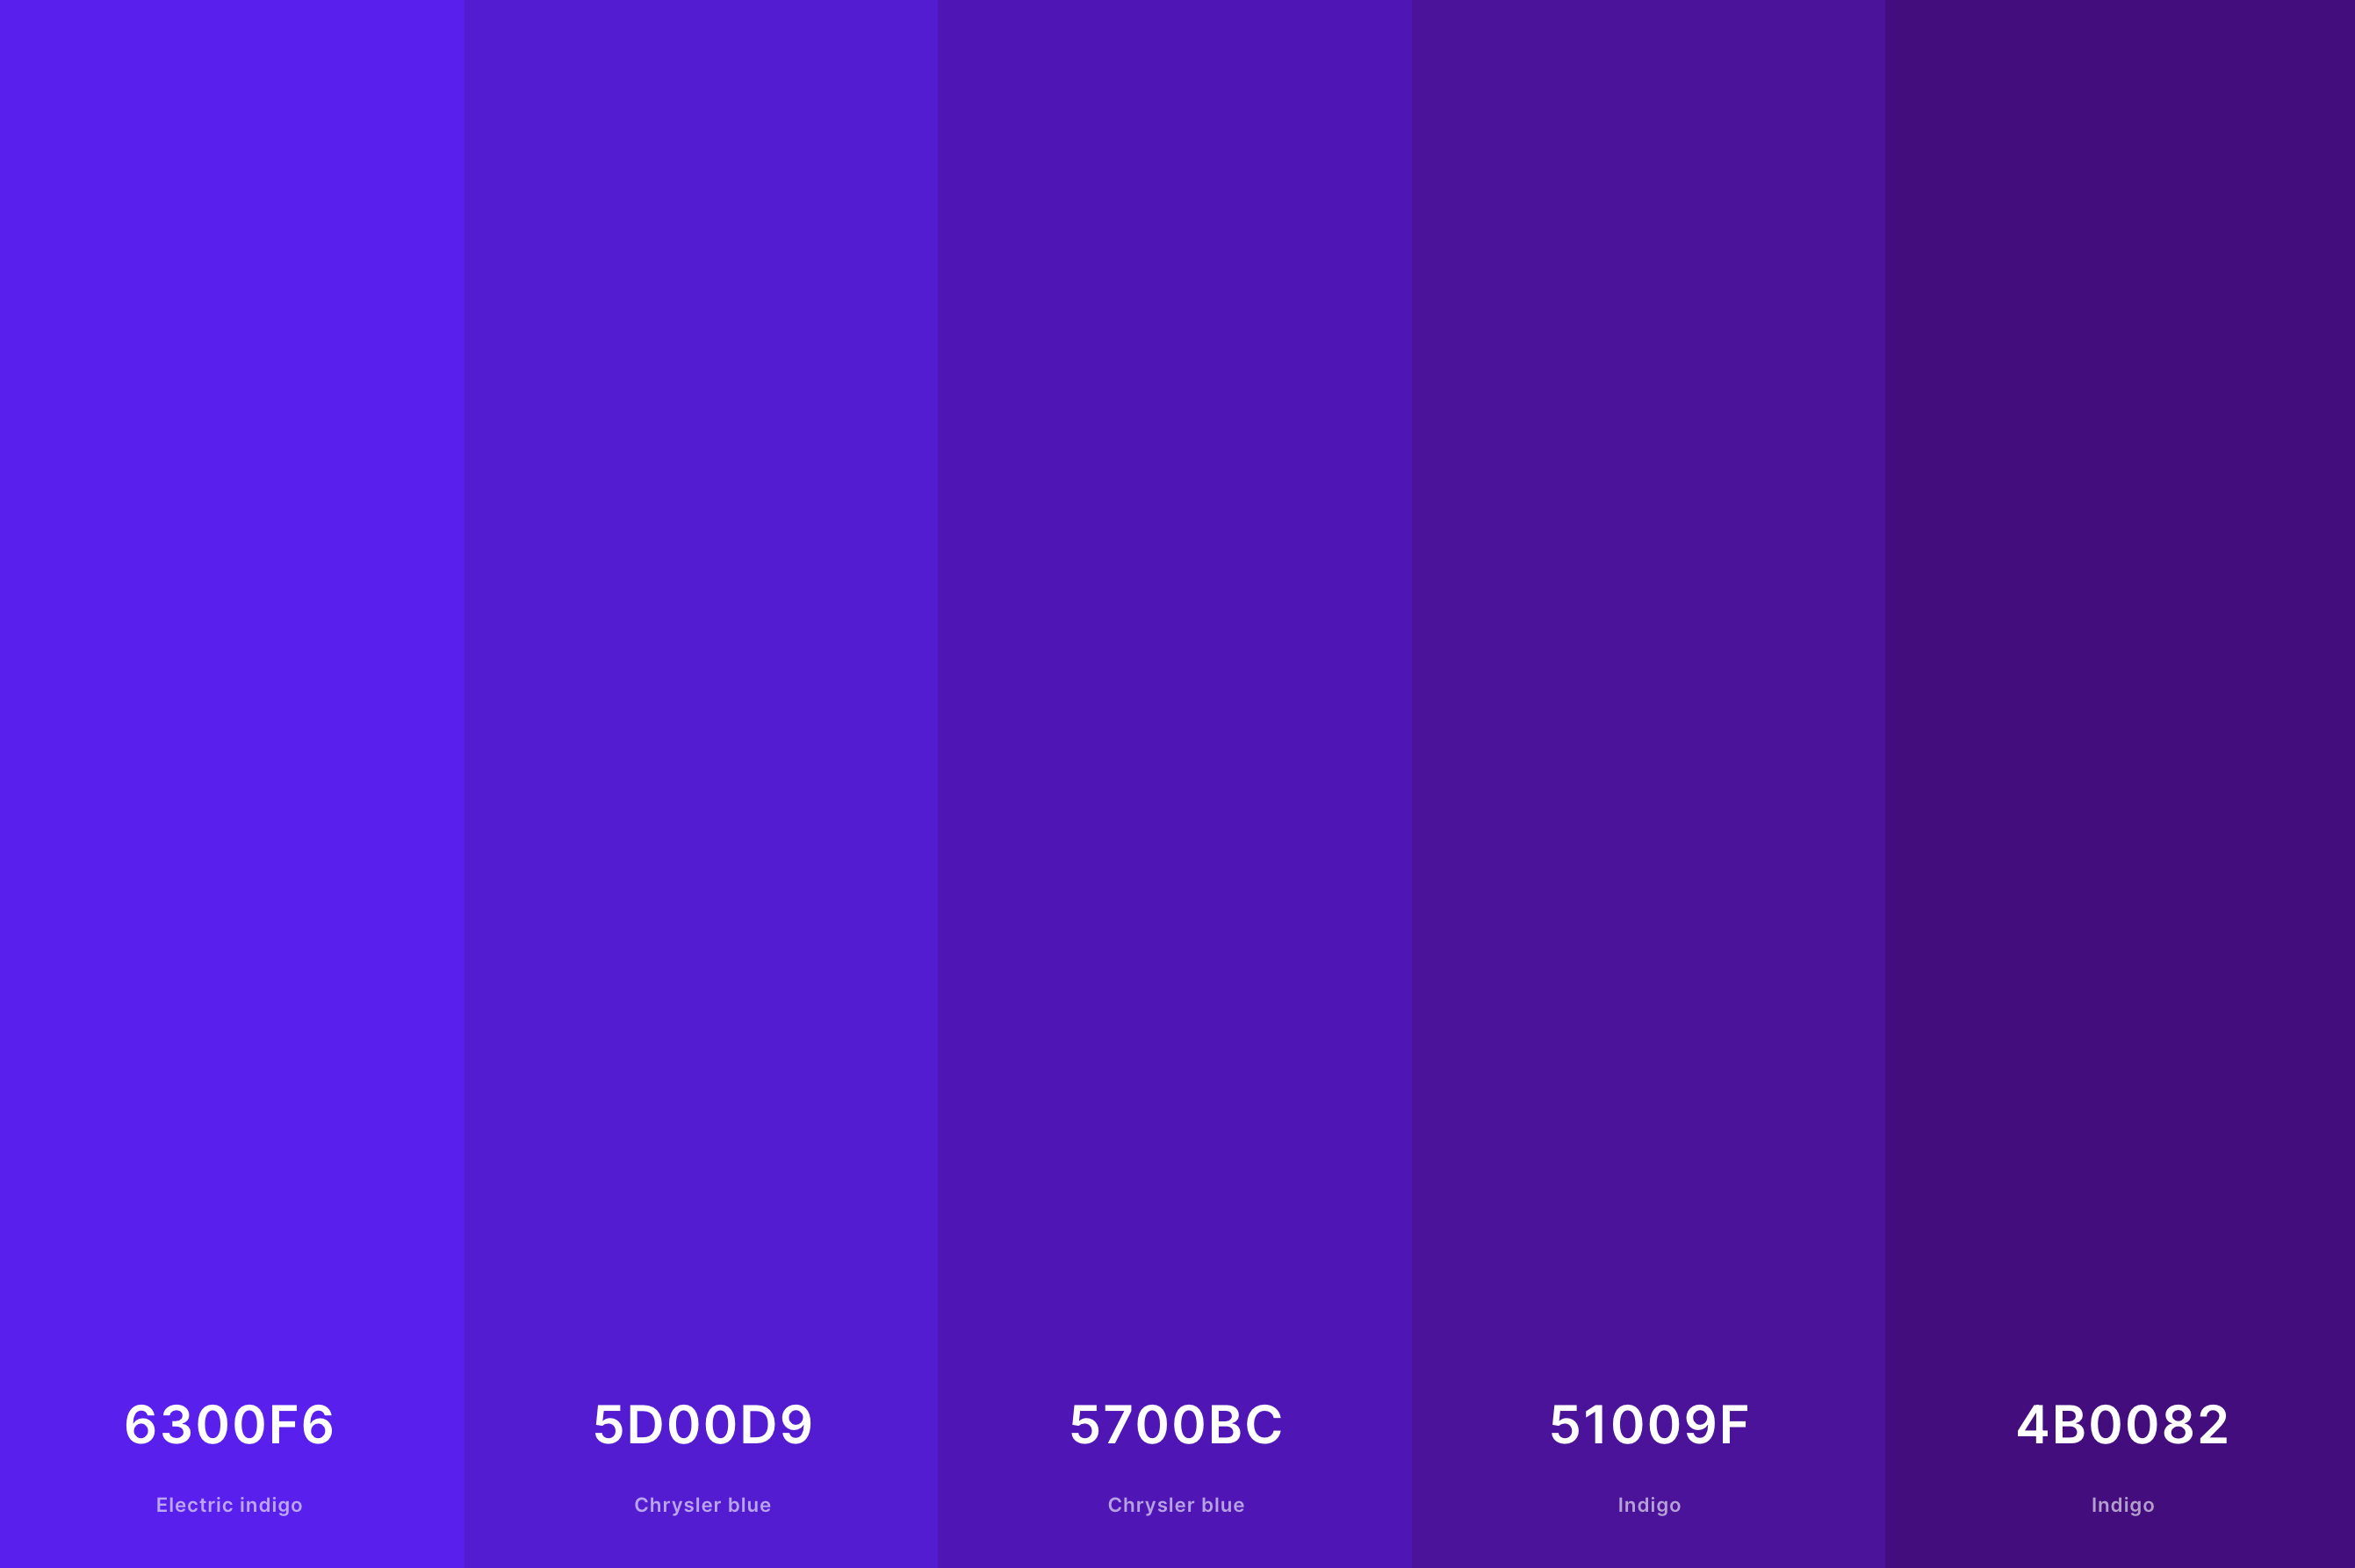 24. Electric Indigo Color Palette Color Palette with Electric Indigo (Hex #6300F6) + Chrysler Blue (Hex #5D00D9) + Chrysler Blue (Hex #5700BC) + Indigo (Hex #51009F) + Indigo (Hex #4B0082) Color Palette with Hex Codes